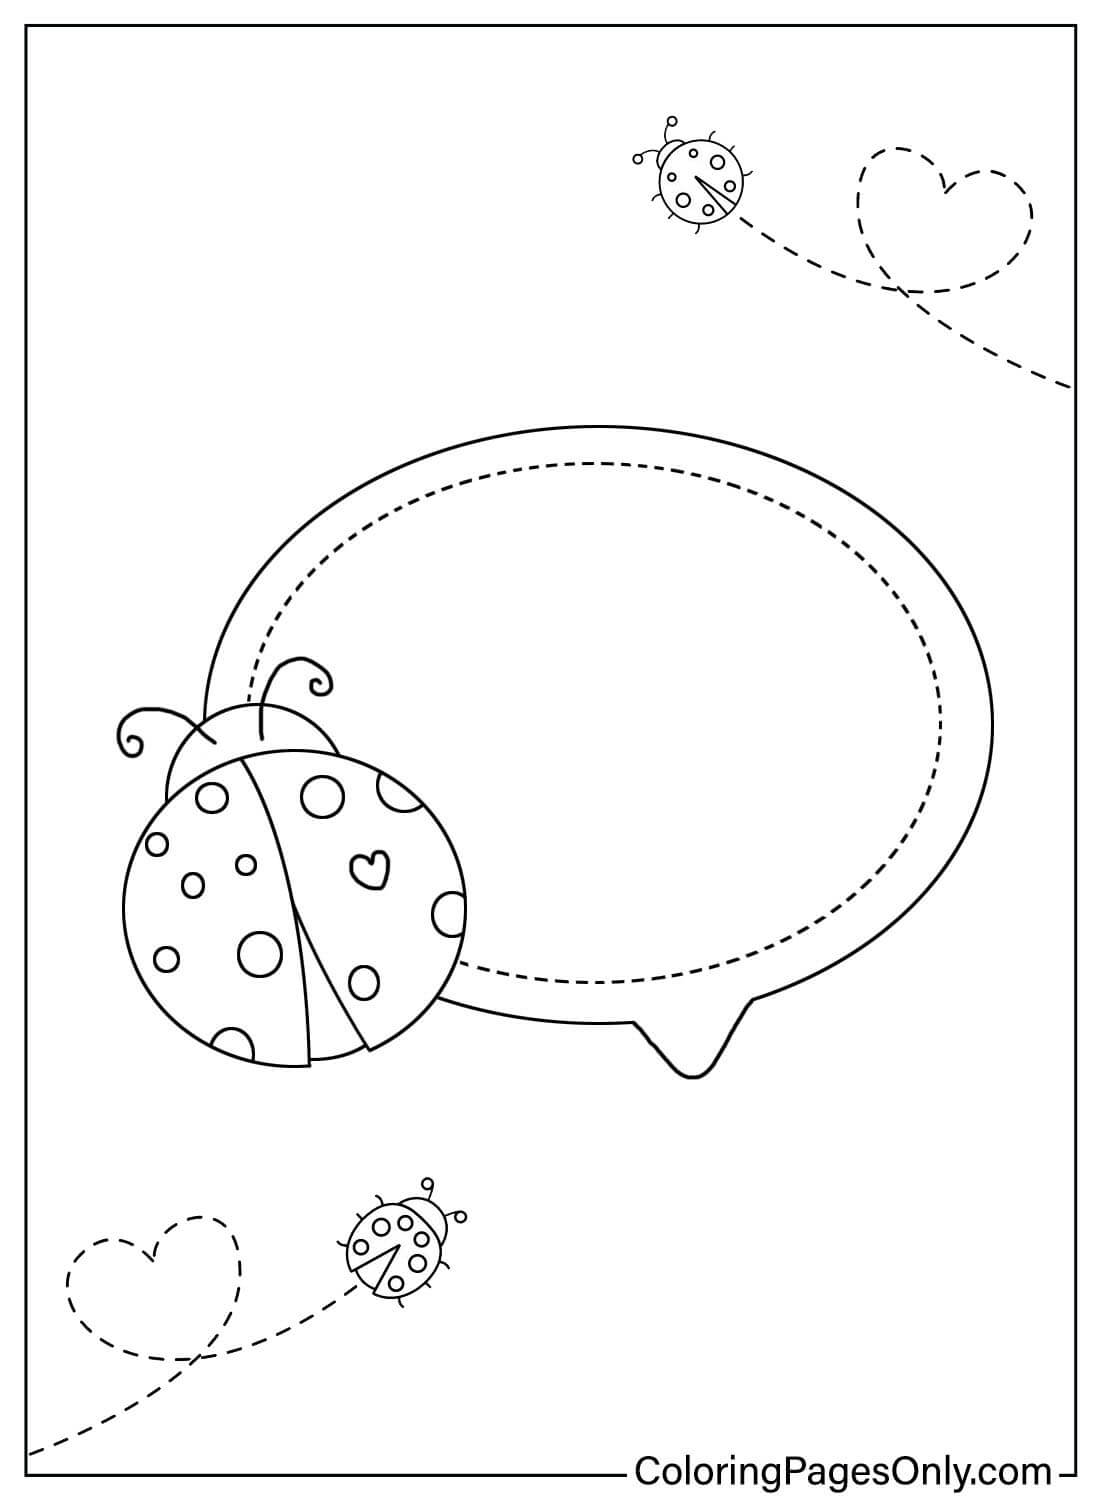 Ladybug Speech Bubble Coloring Page from Ladybug